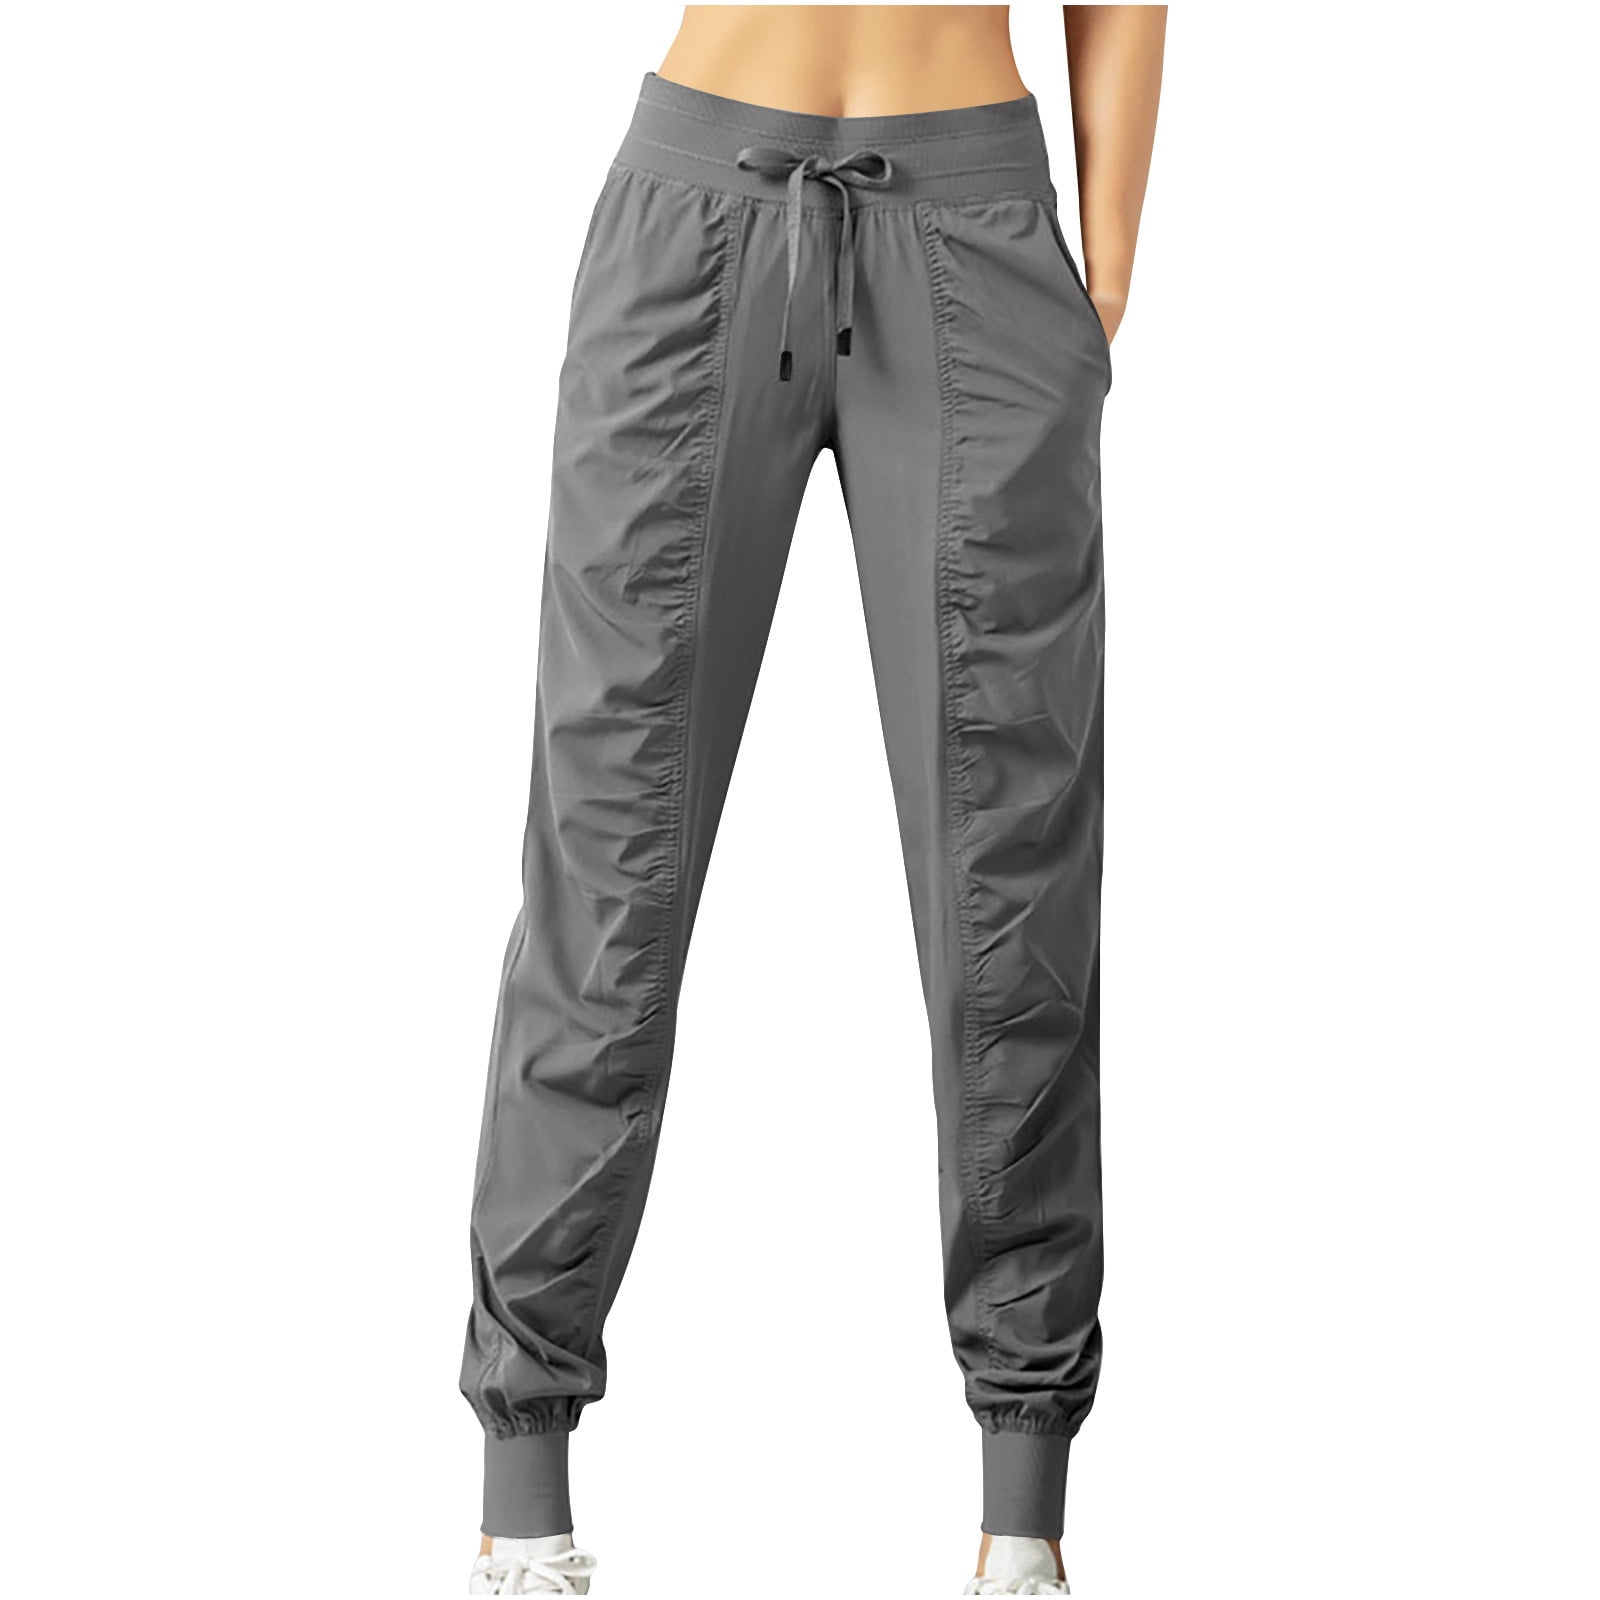 Linen Pants, Elastic Cuff Pants, Jogger Pants for Women, Bottom Elastic  Pants 96 